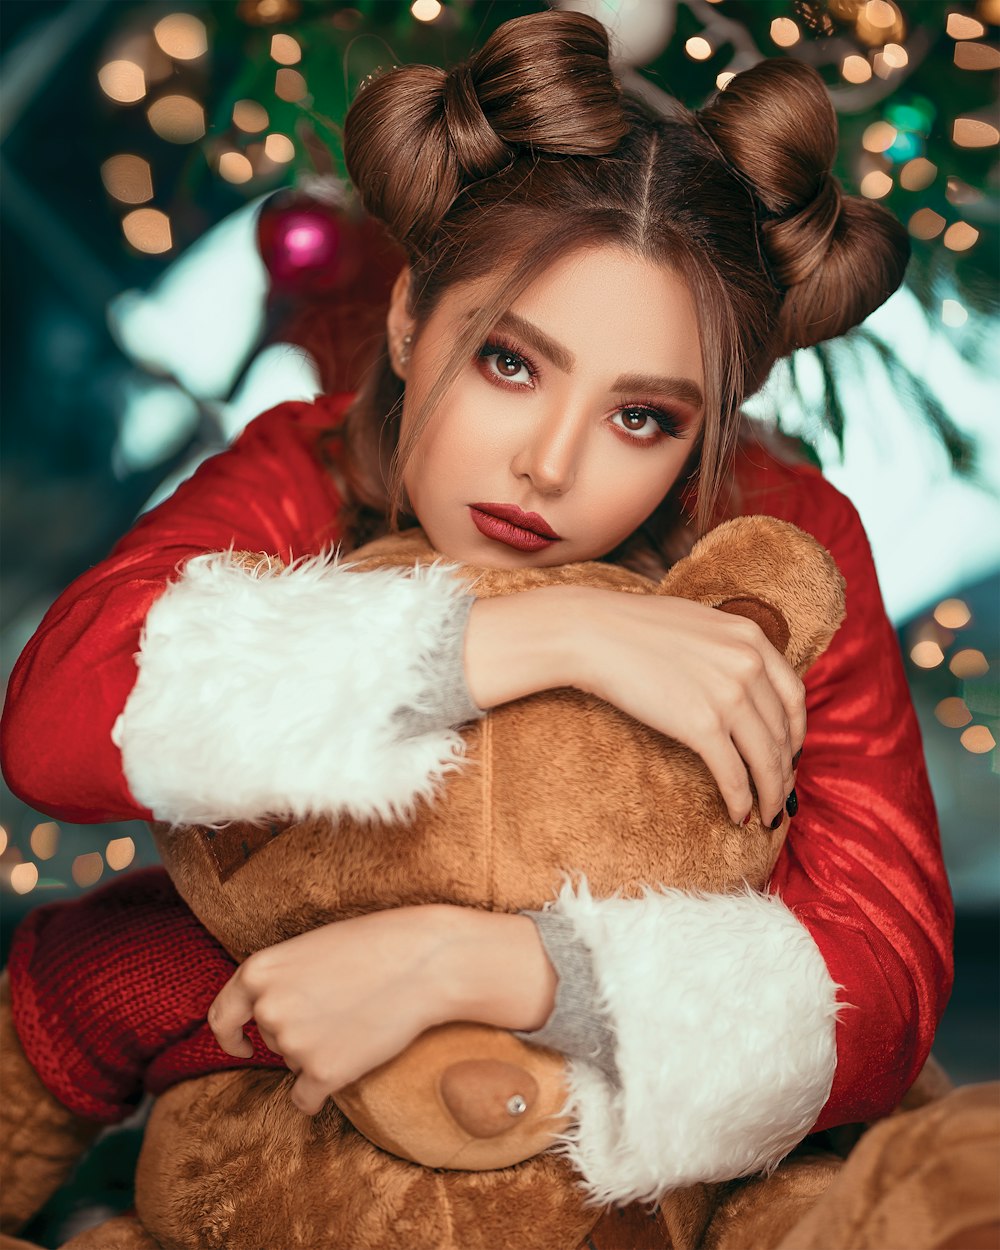 woman wearing red and white Santa costume hugging brown bear plush toy